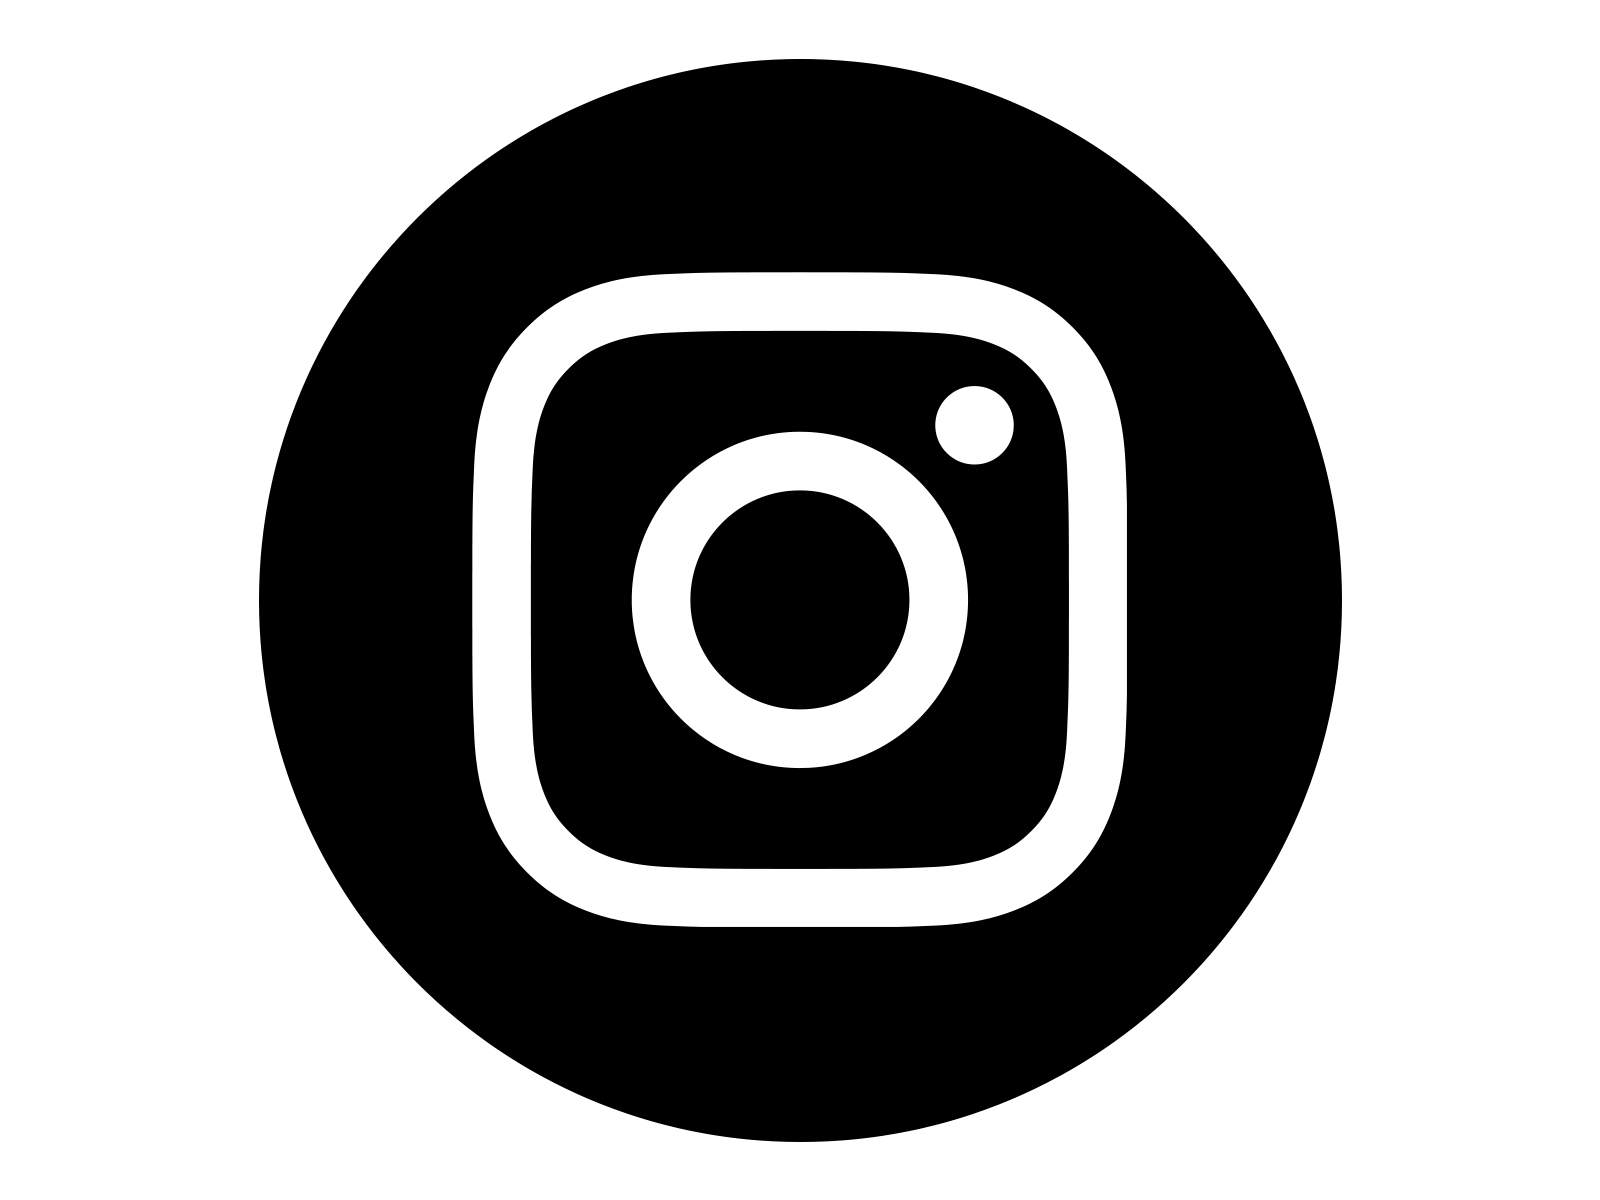 Black and White Circle Logo - Instagram Logo PNG Transparent & SVG Vector - Freebie Supply